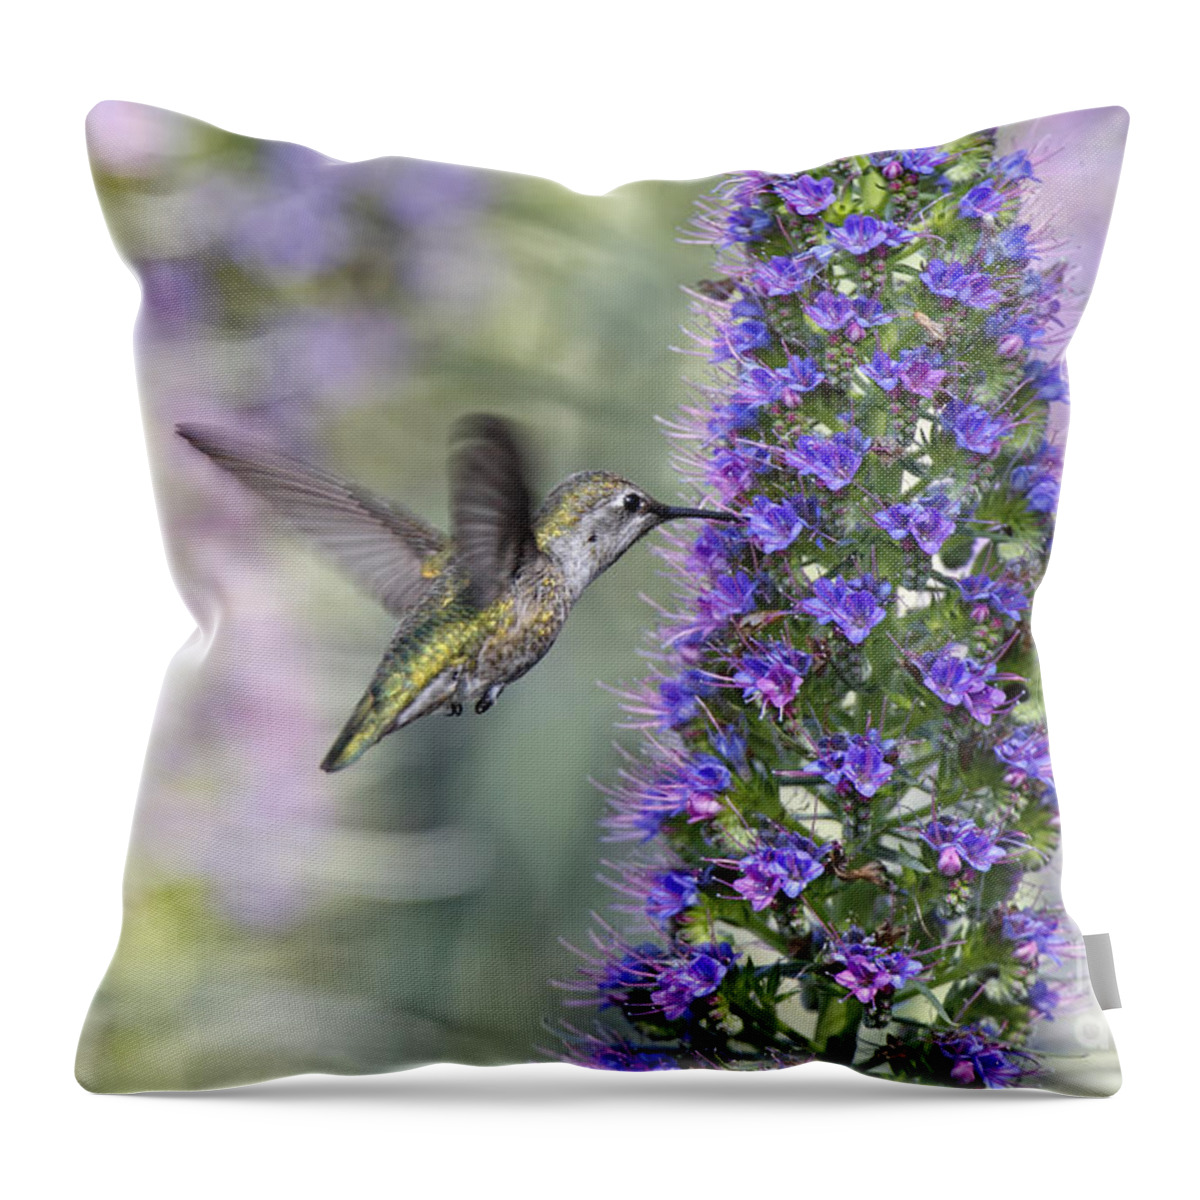 Humming Bird Throw Pillow featuring the photograph Hummingbird and Bee by Susan Gary